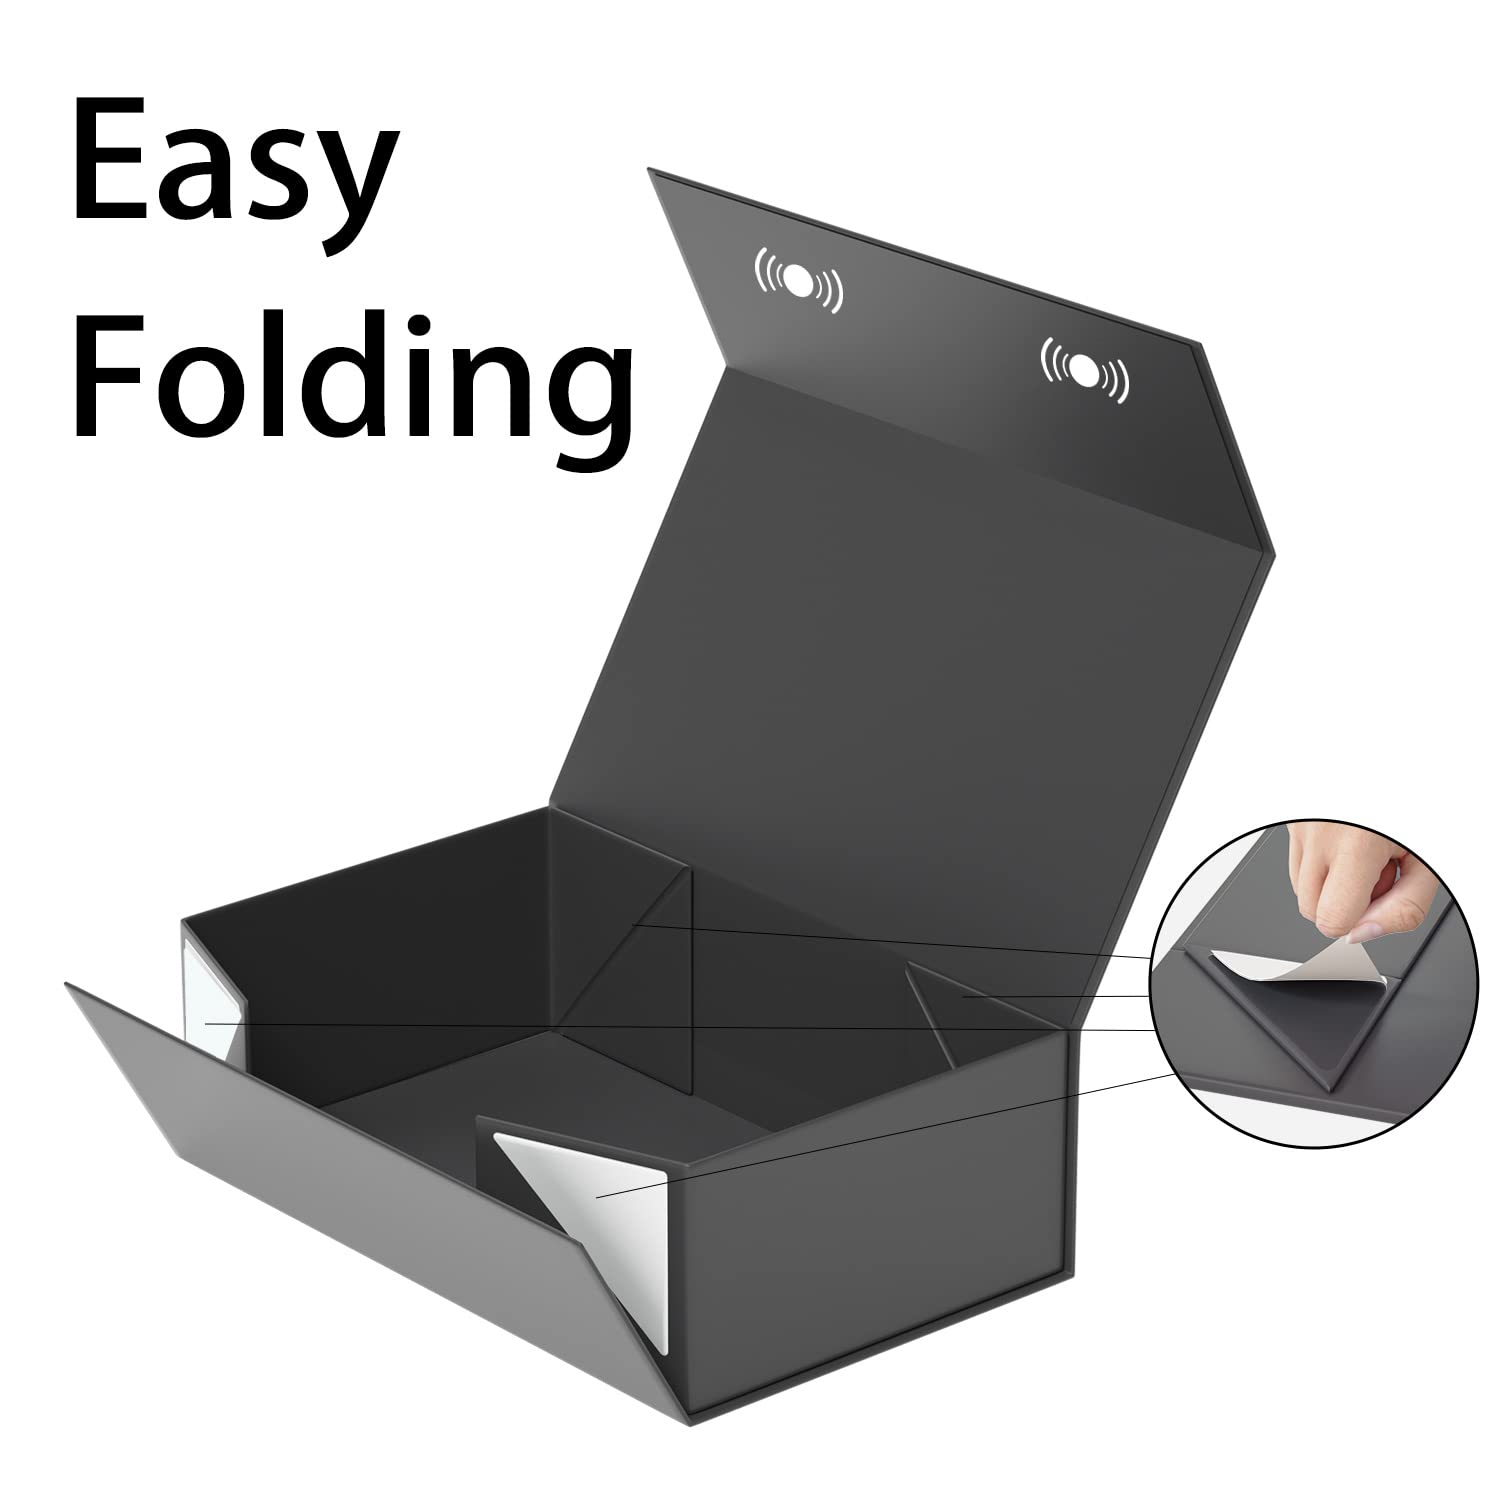 Easy folding gift box